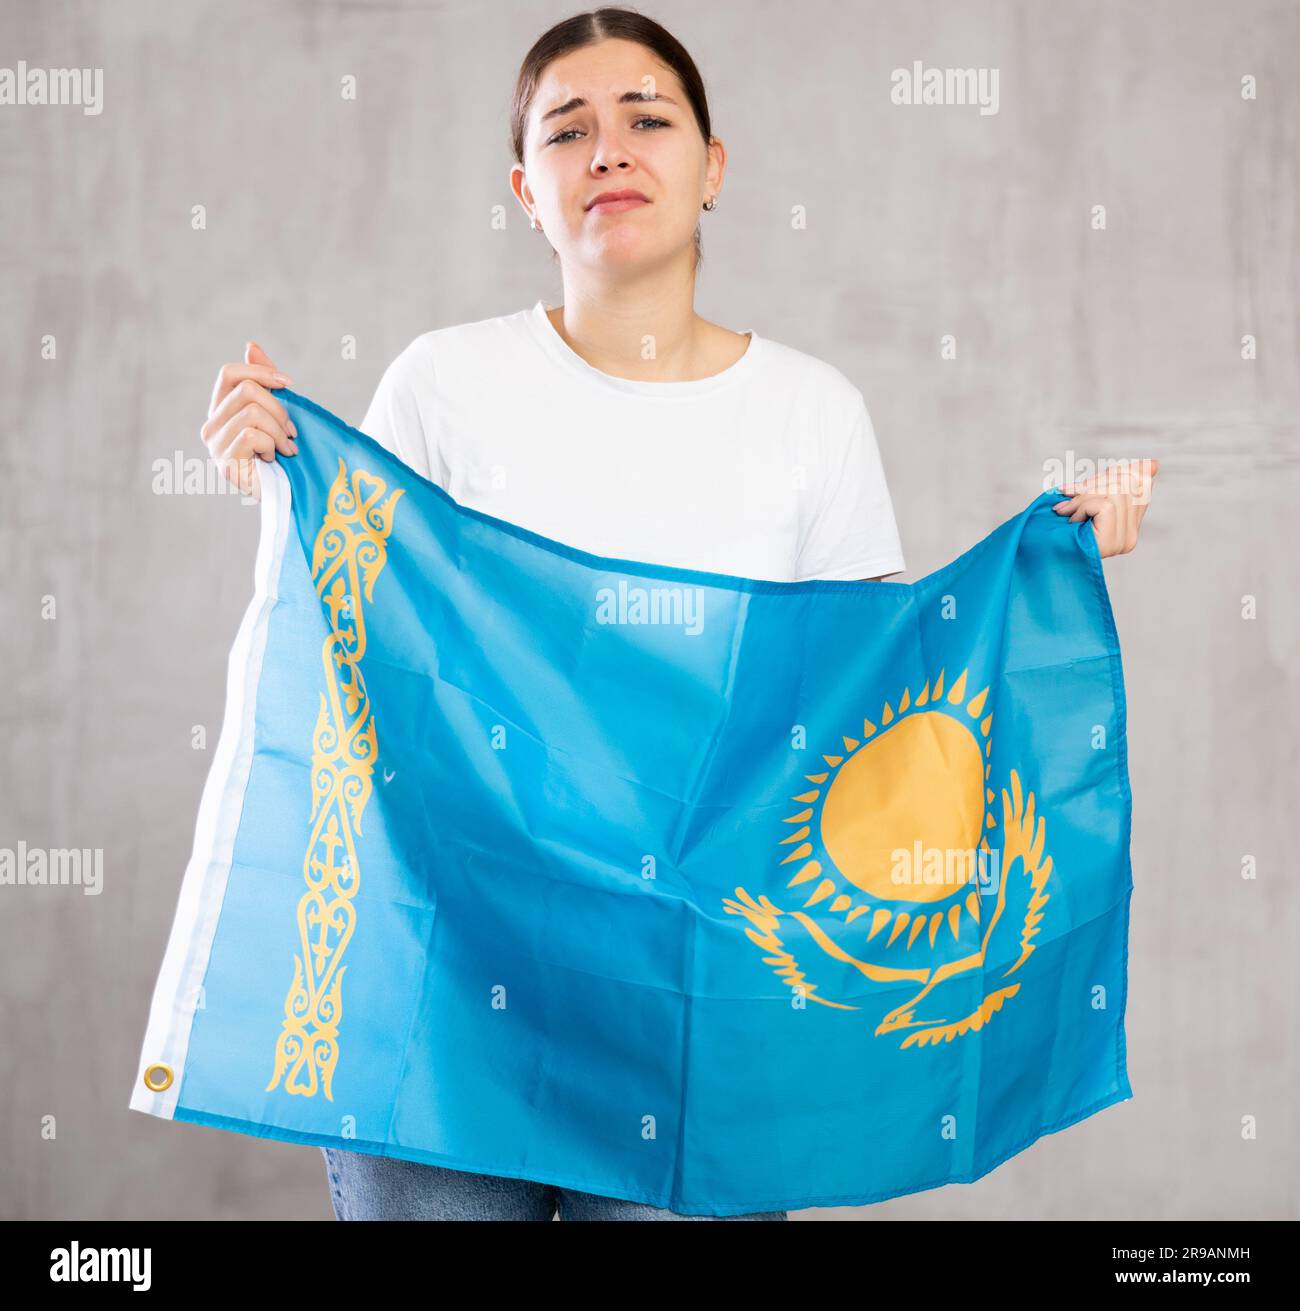 Sad young woman holding flag of Kazakhstan Stock Photo - Alamy